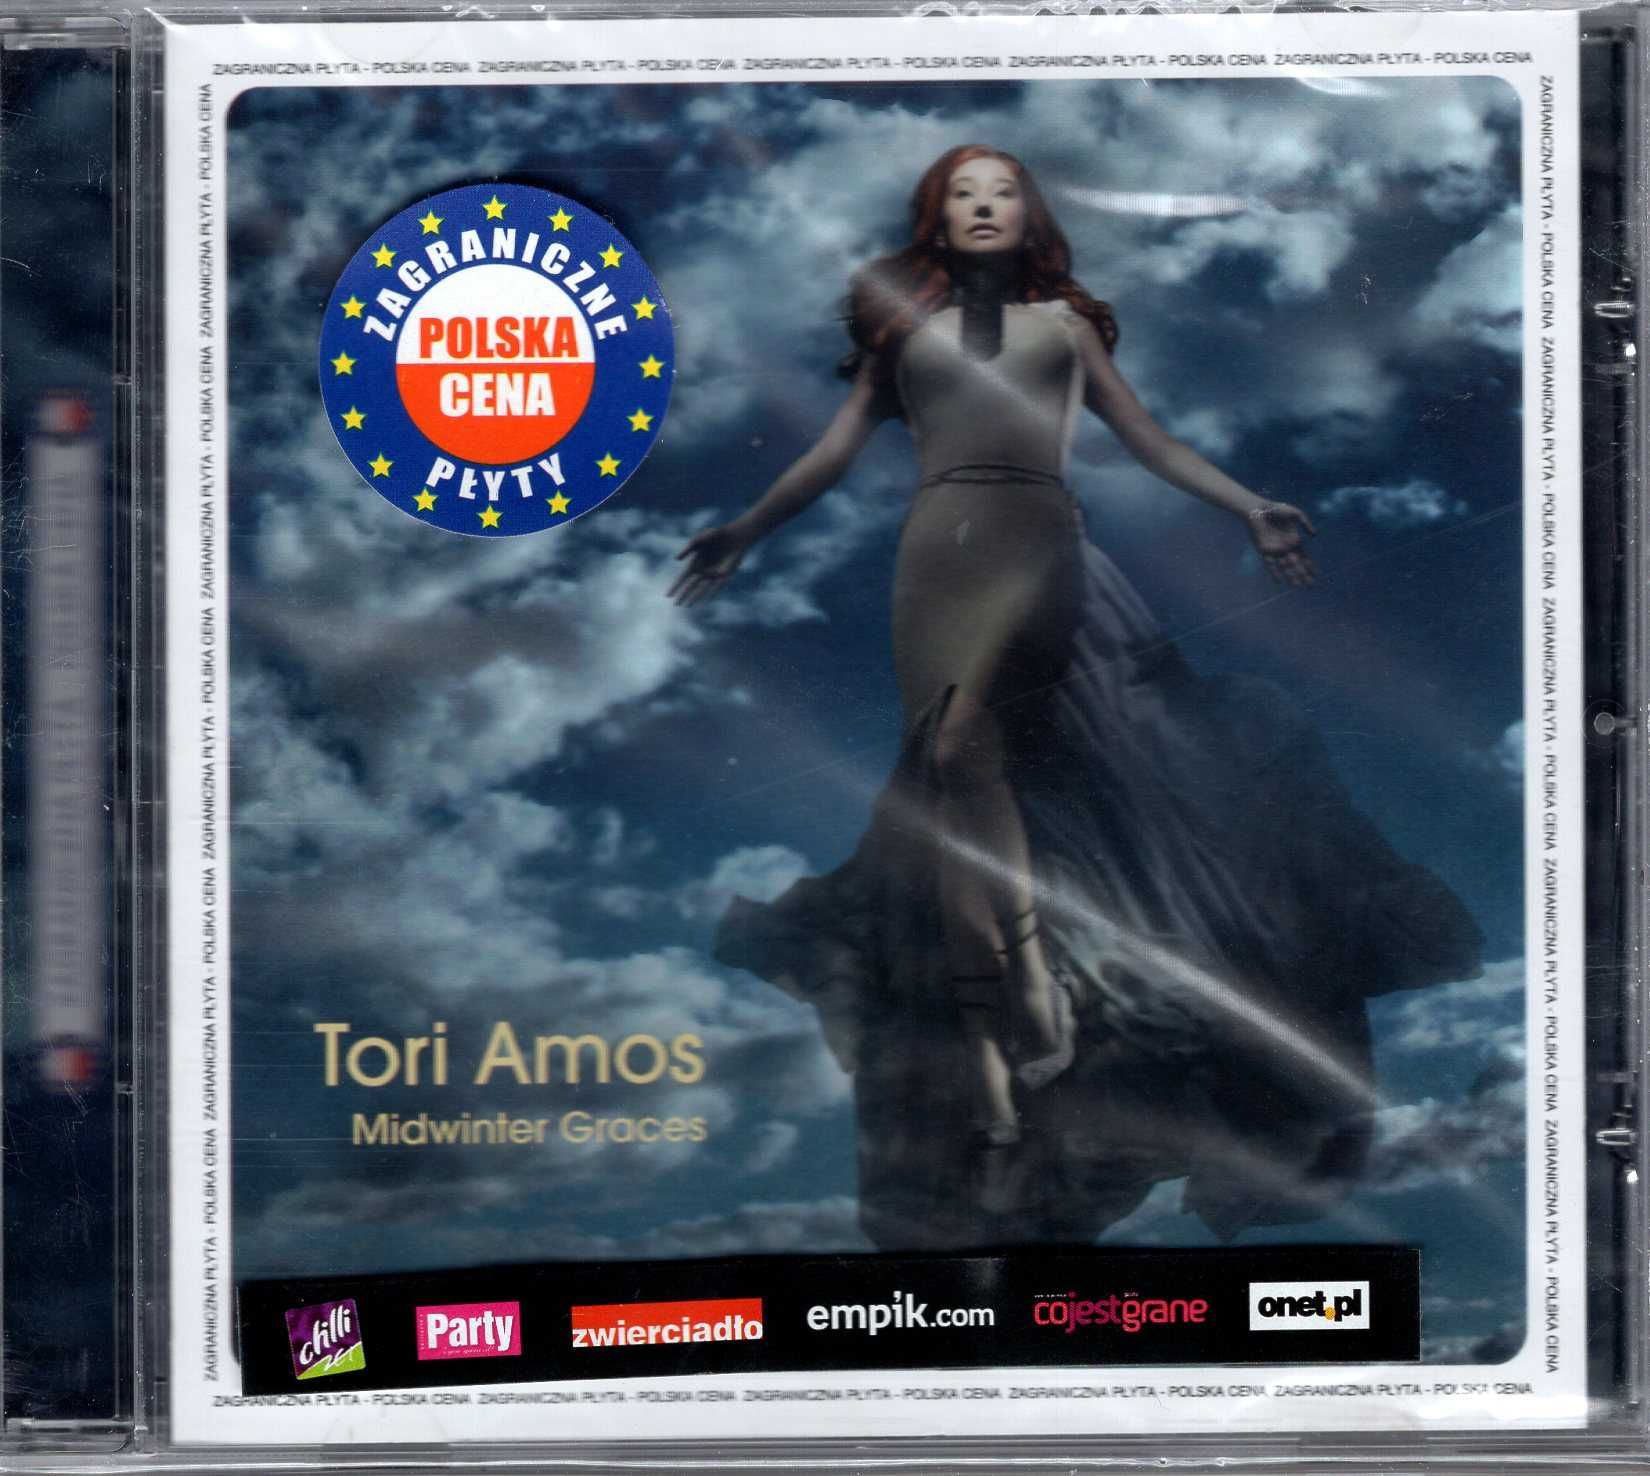 Tori Amos - Midwinter Graces (Polska cena) (CD)